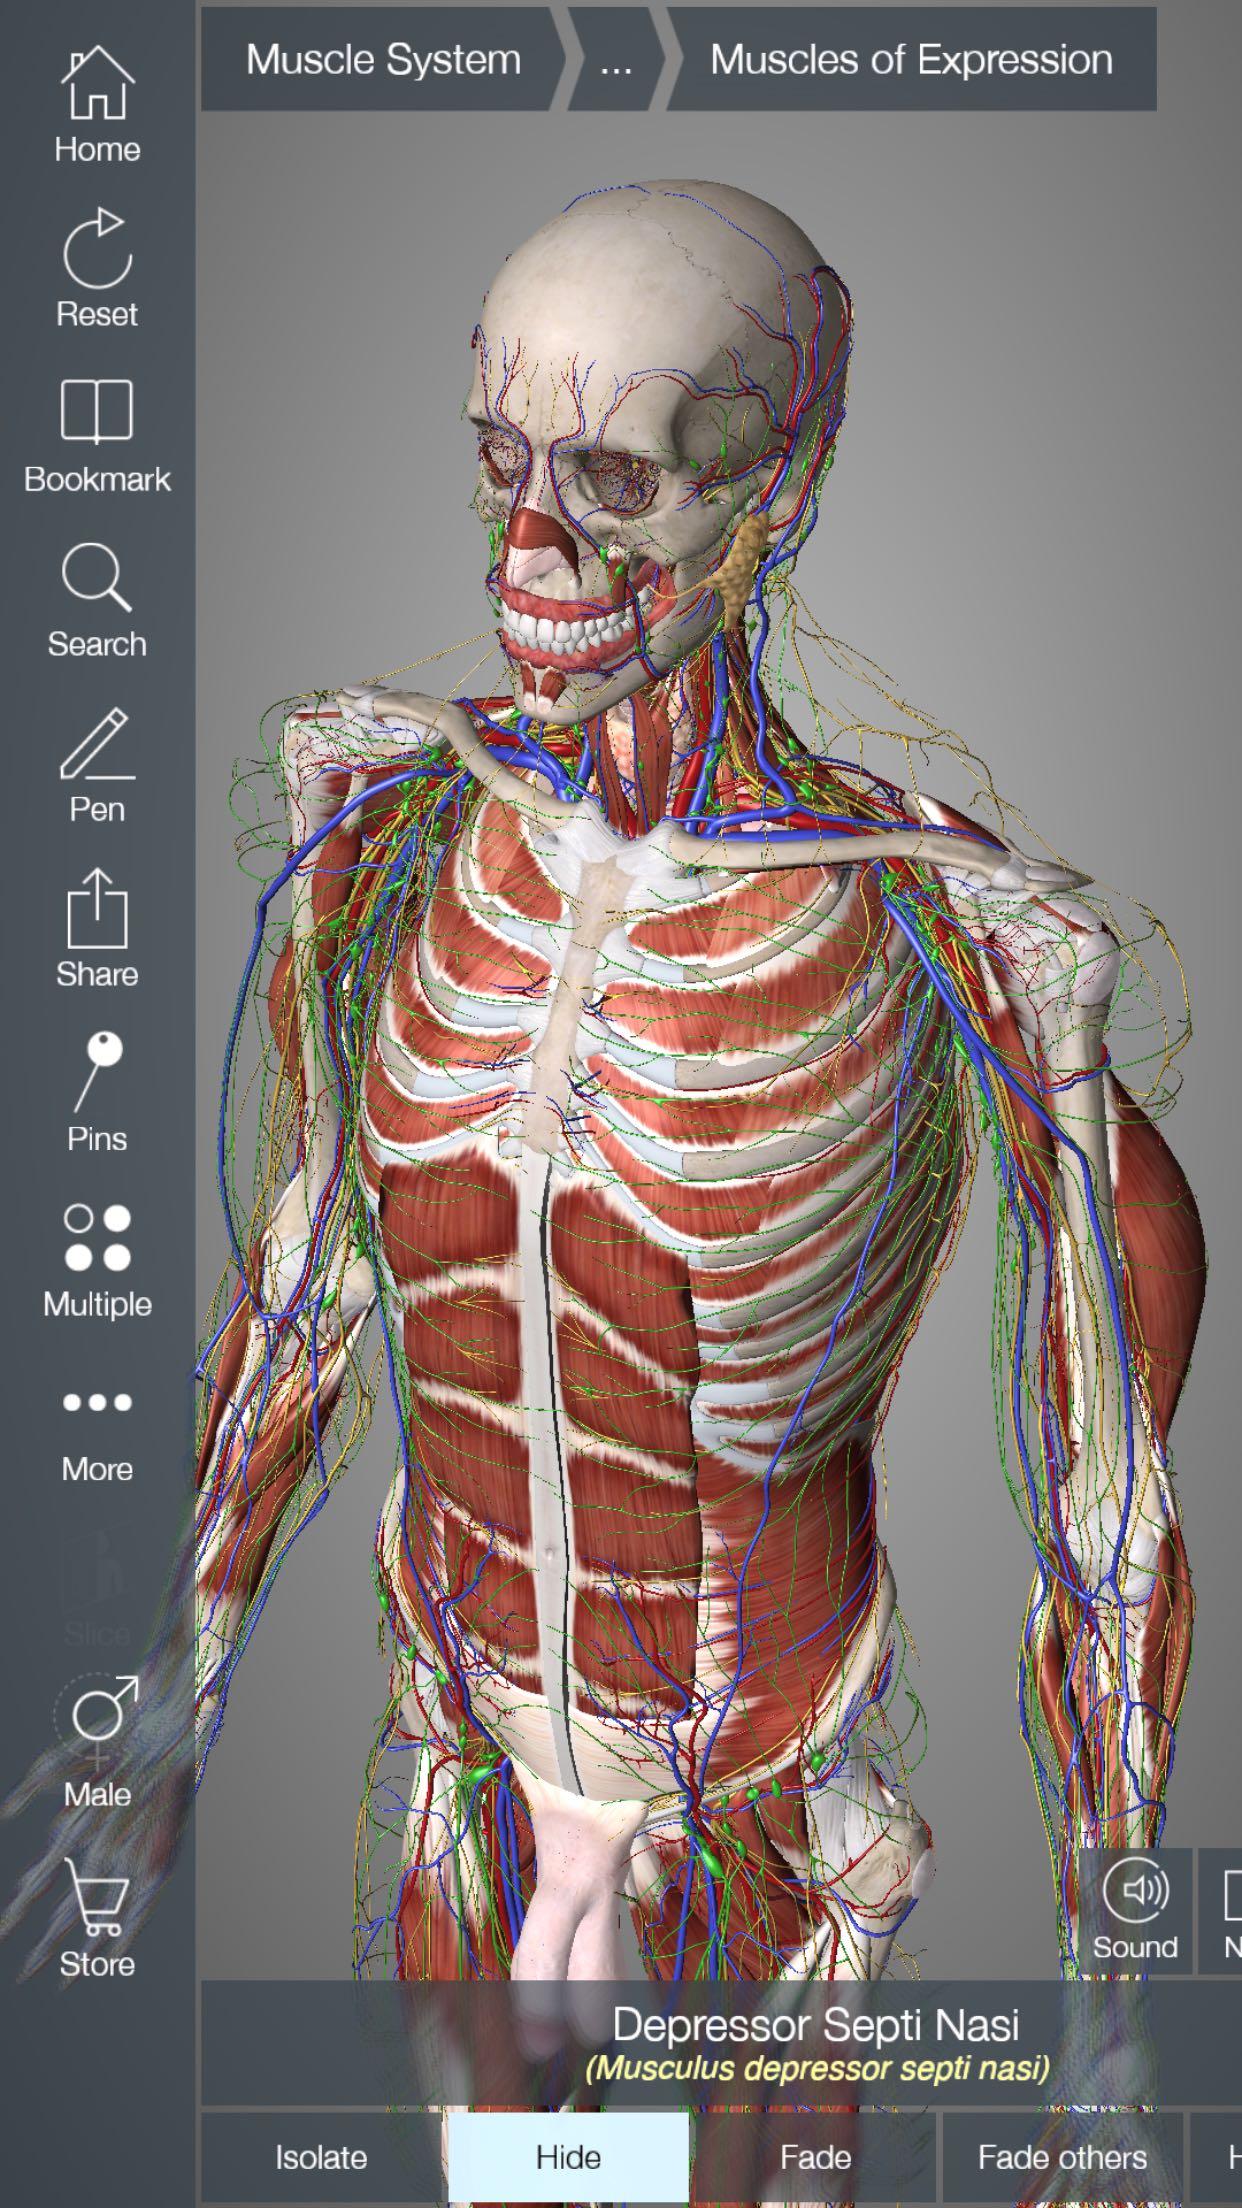 Complete Anatomy这款解剖学APP有人买过吗？和3D Body比怎么样？ - 知乎